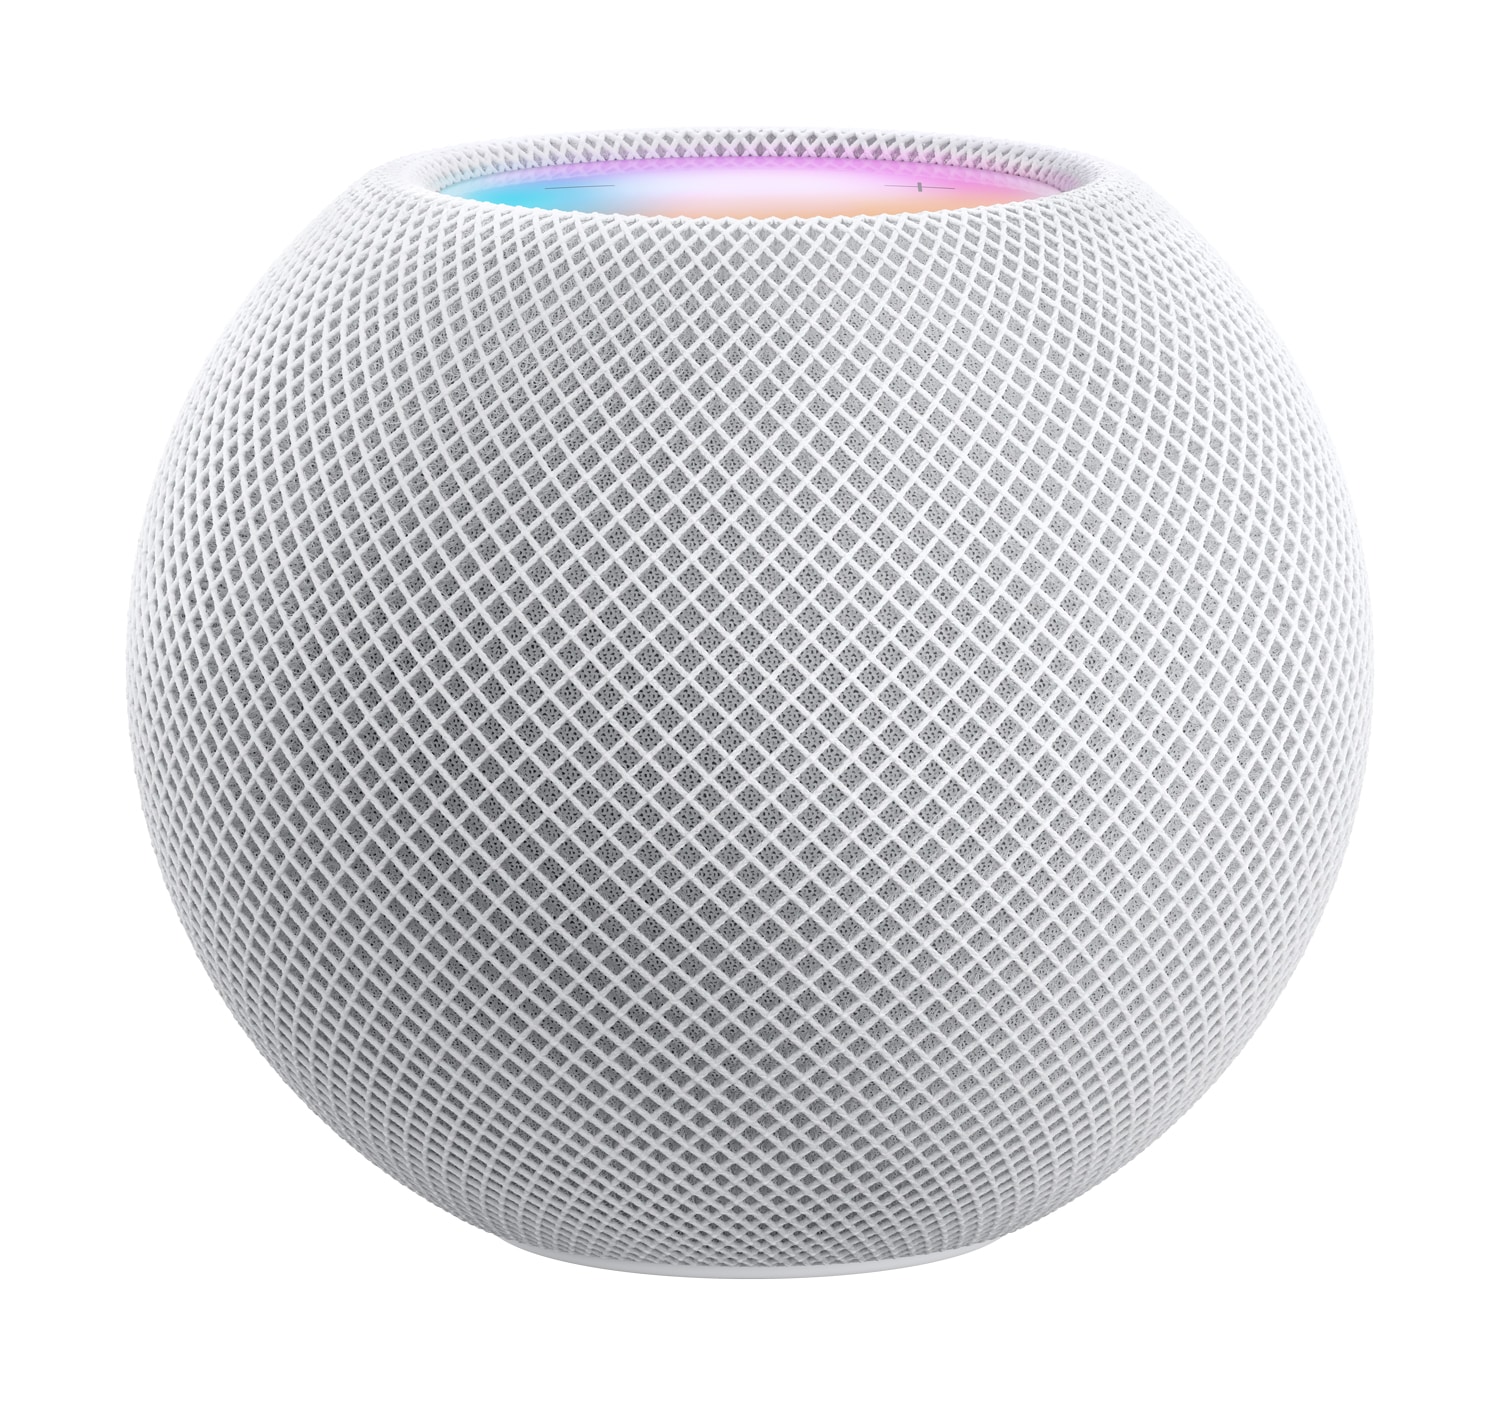 Apple HomePod mini (灰/白) | 法雅客網路商店